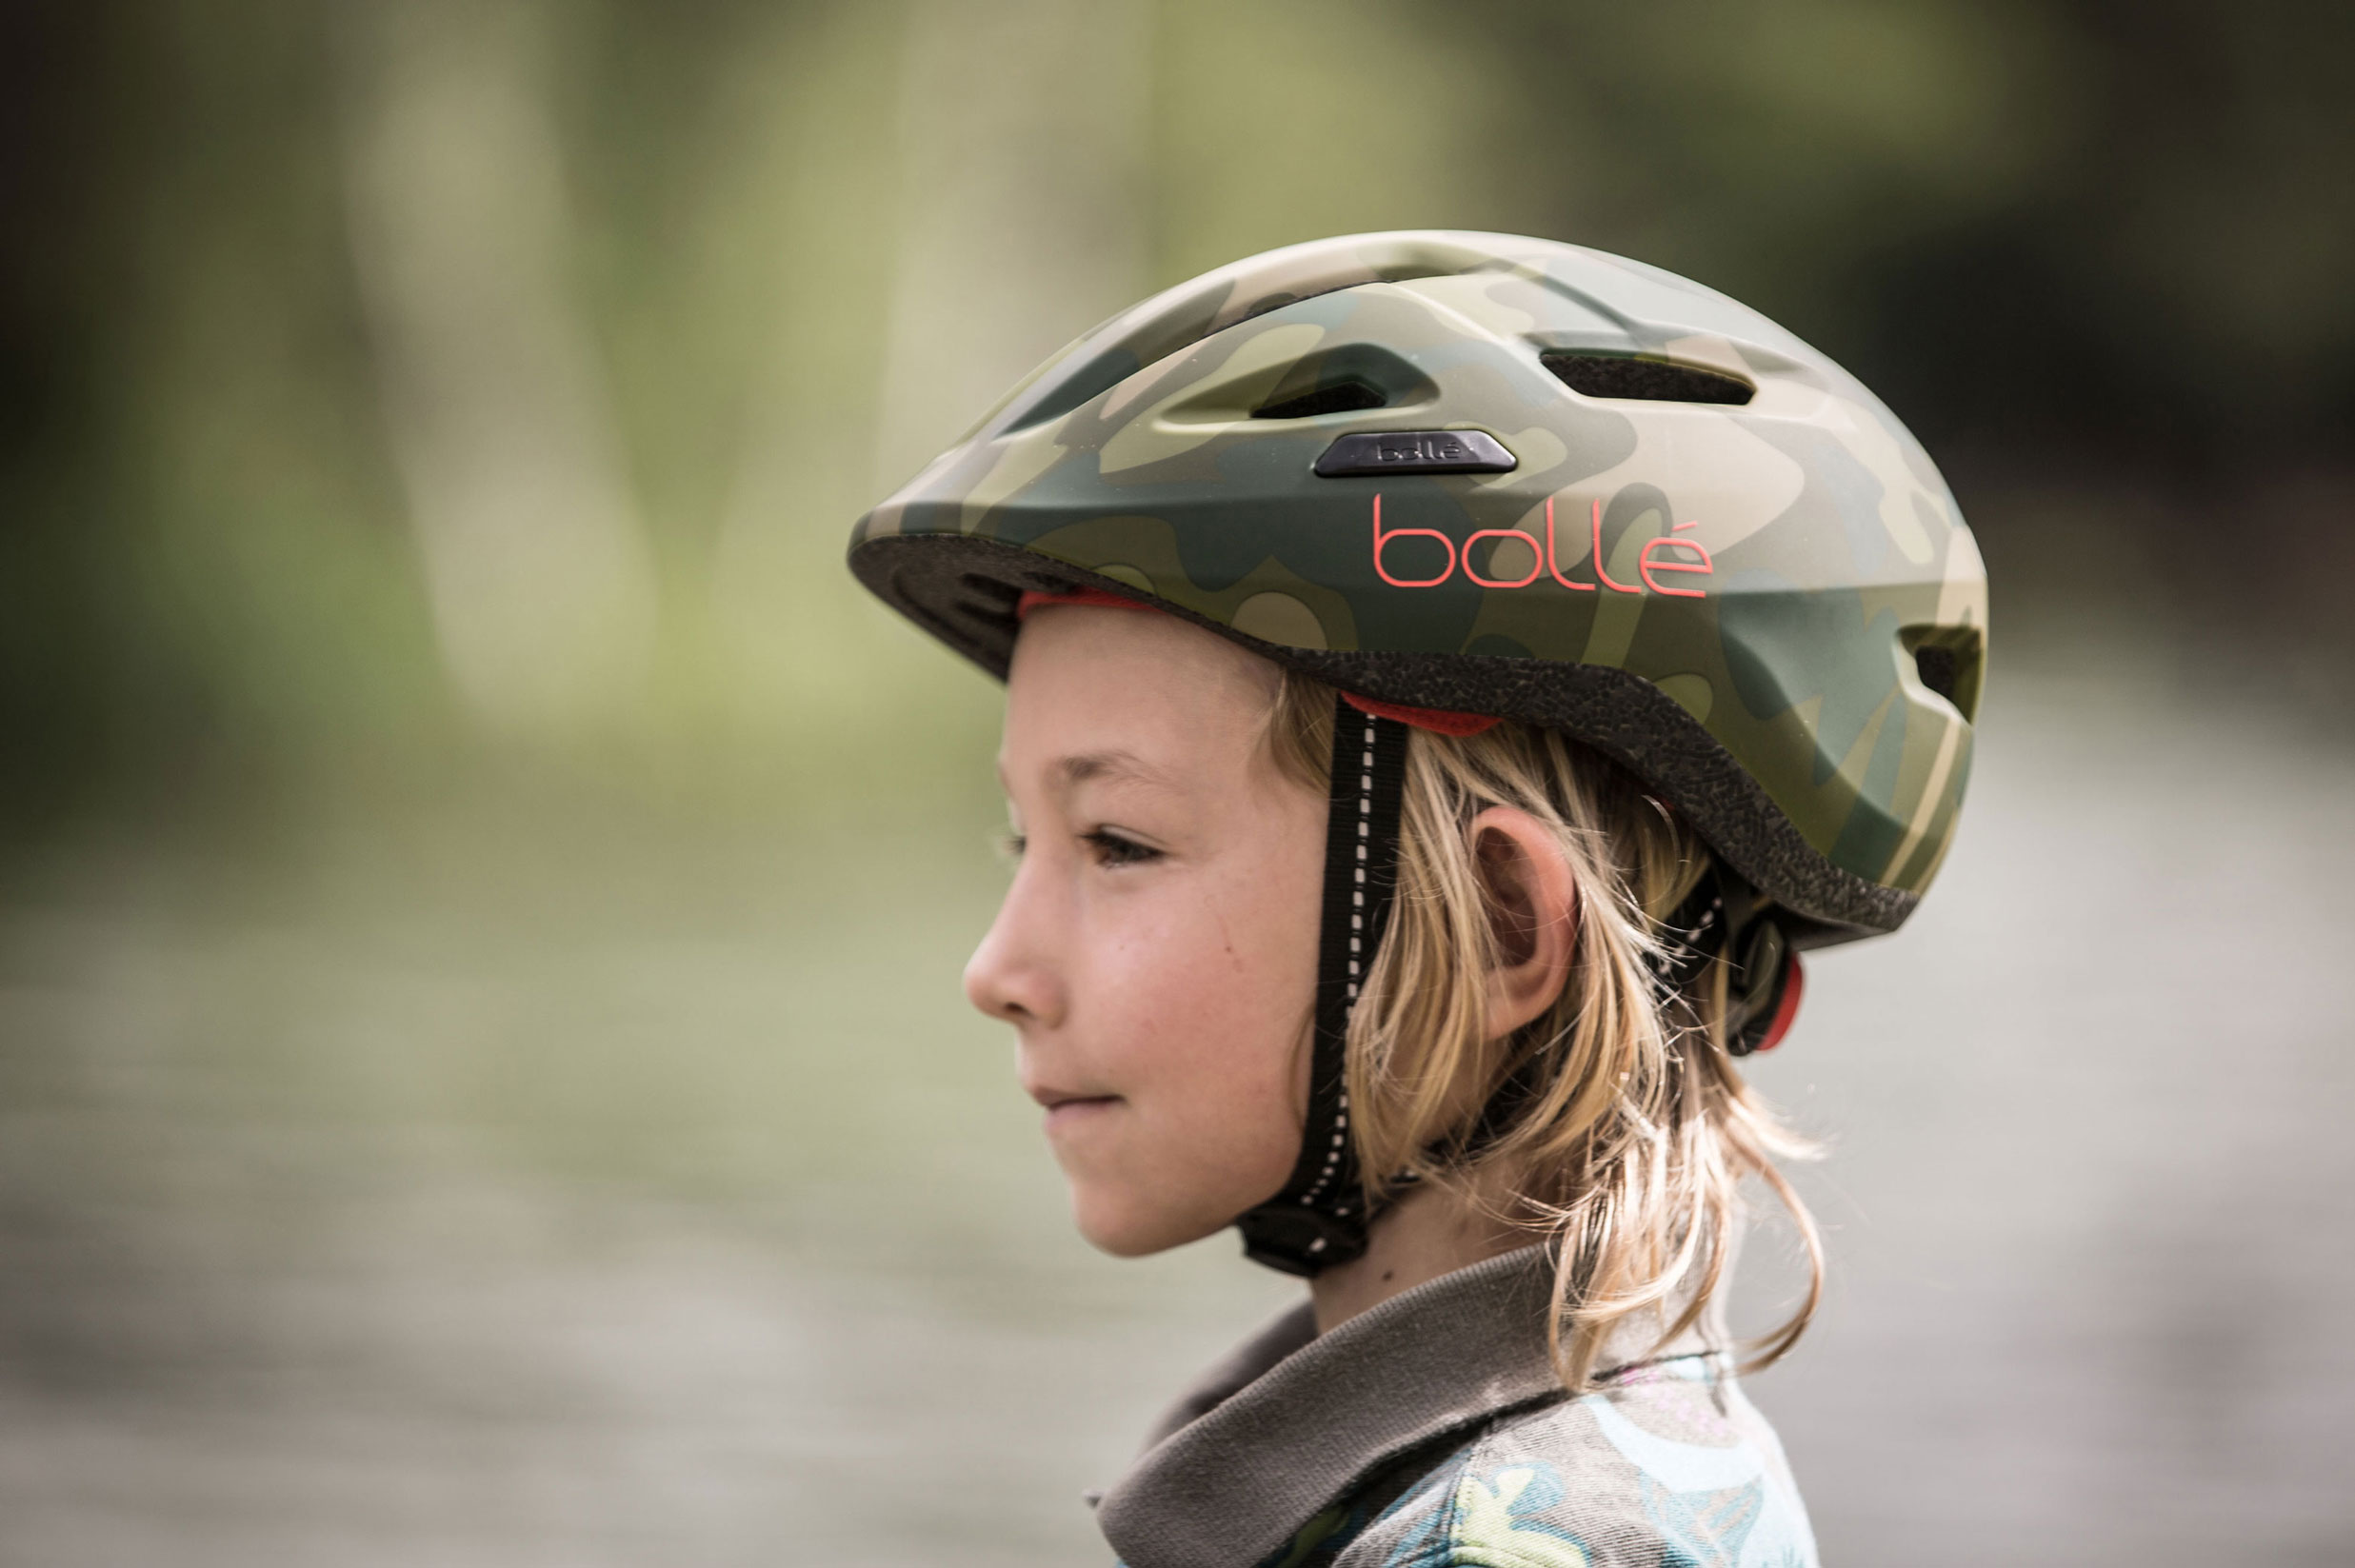 Cyklistická helma pro juniory